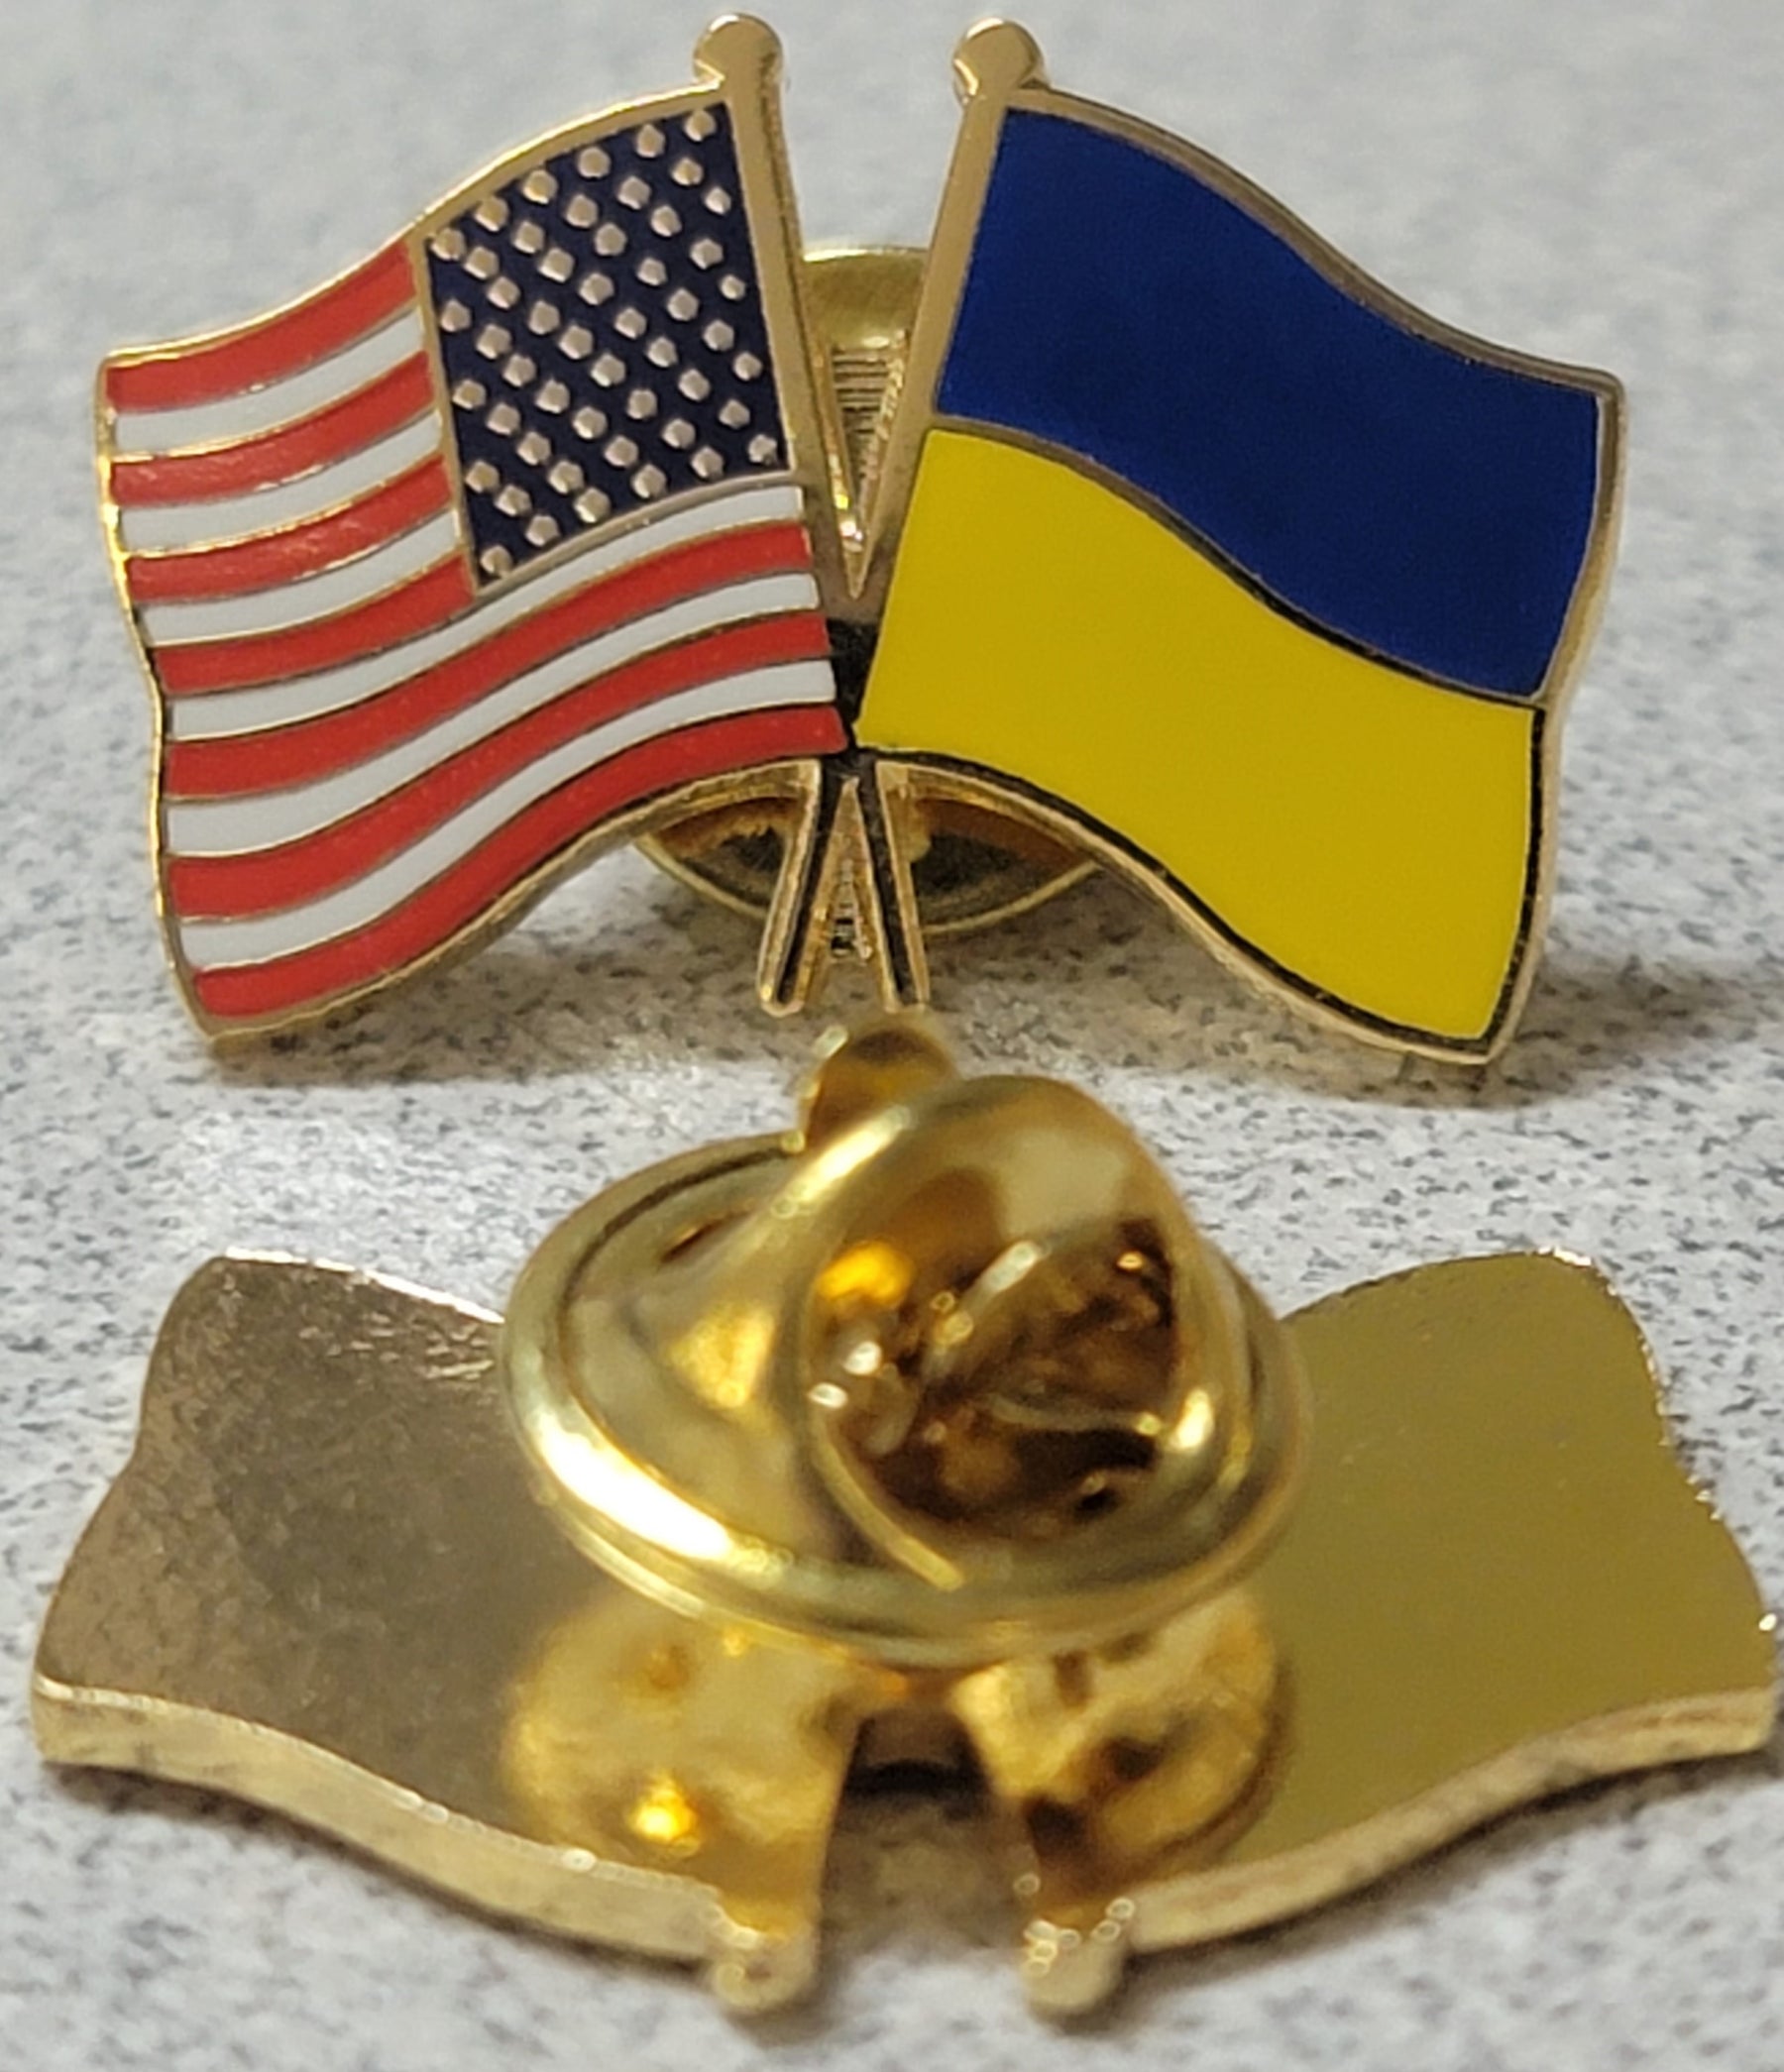 Ukraine / U.S.A. Crossed Flags Pin